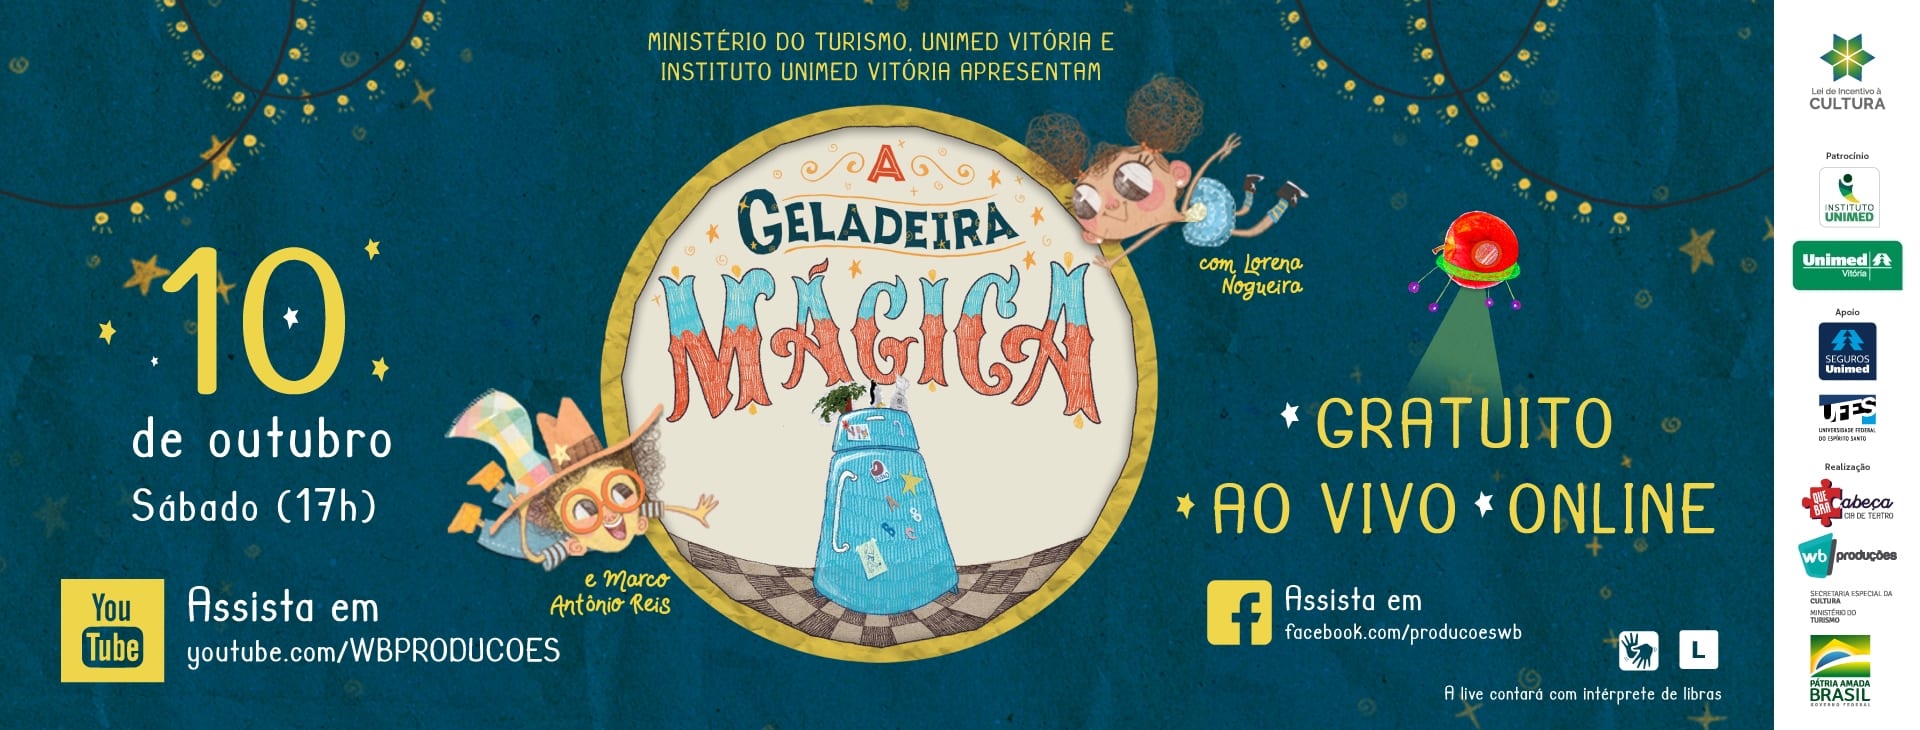 geladeira_magica_banner_site